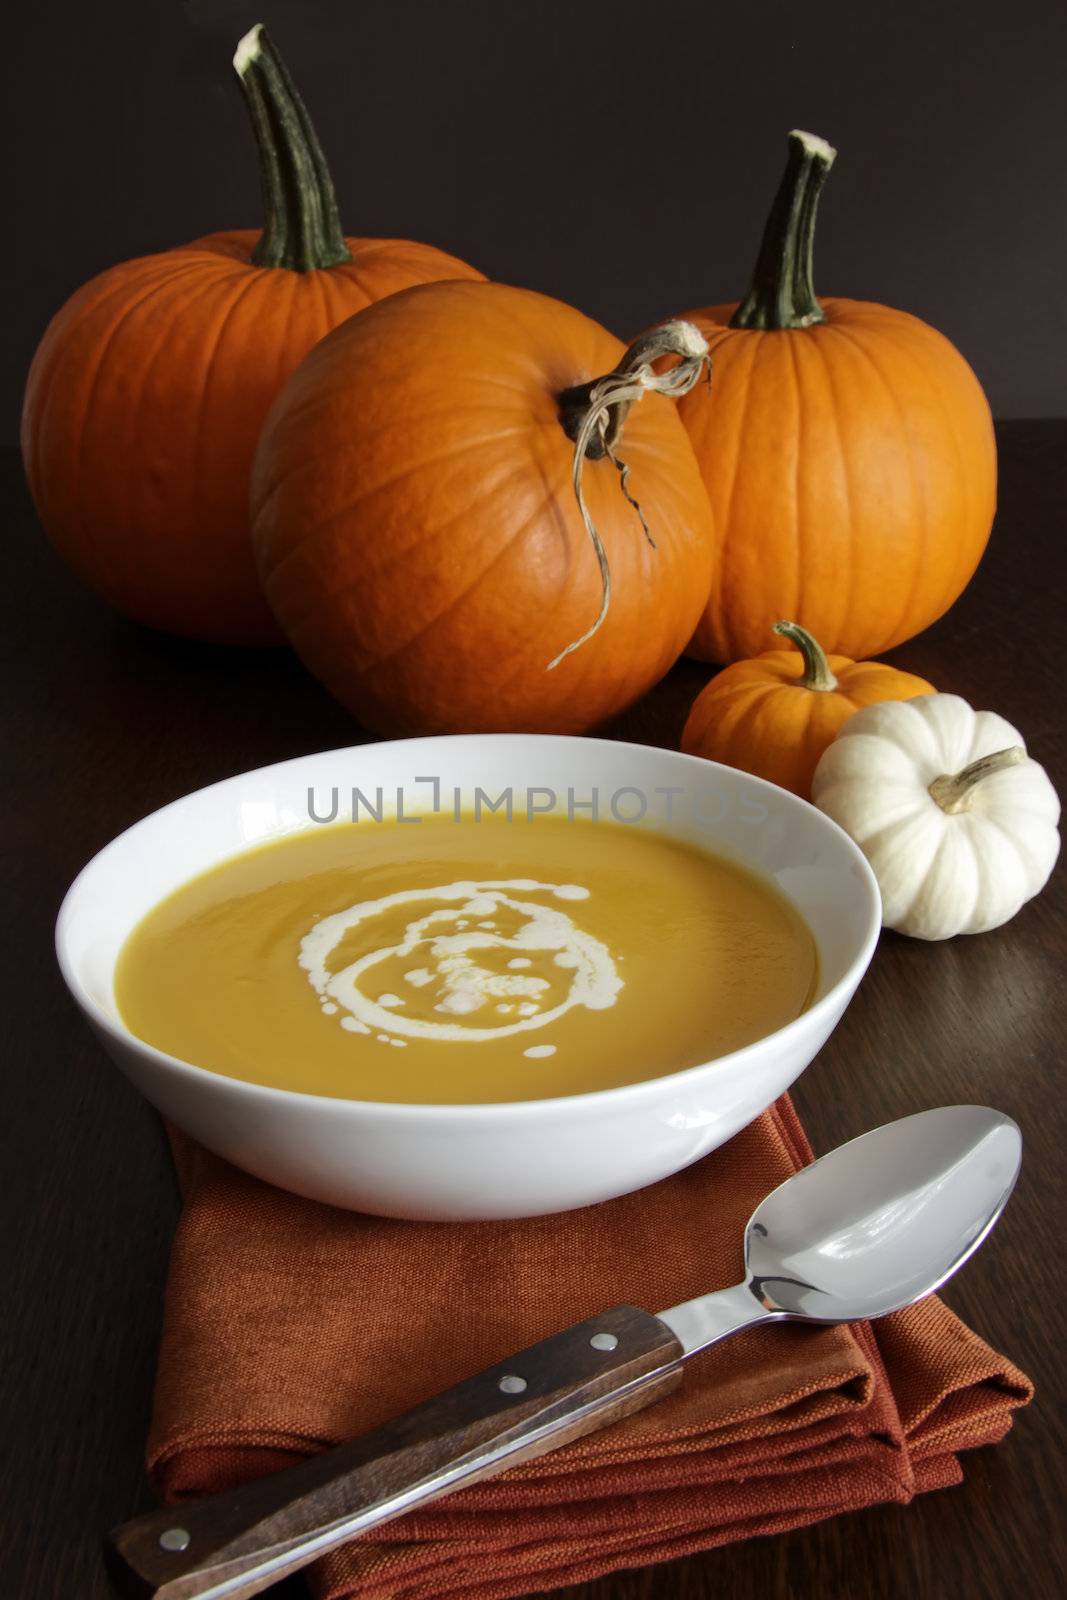 Festive homemade pumpkin soup by Sandralise